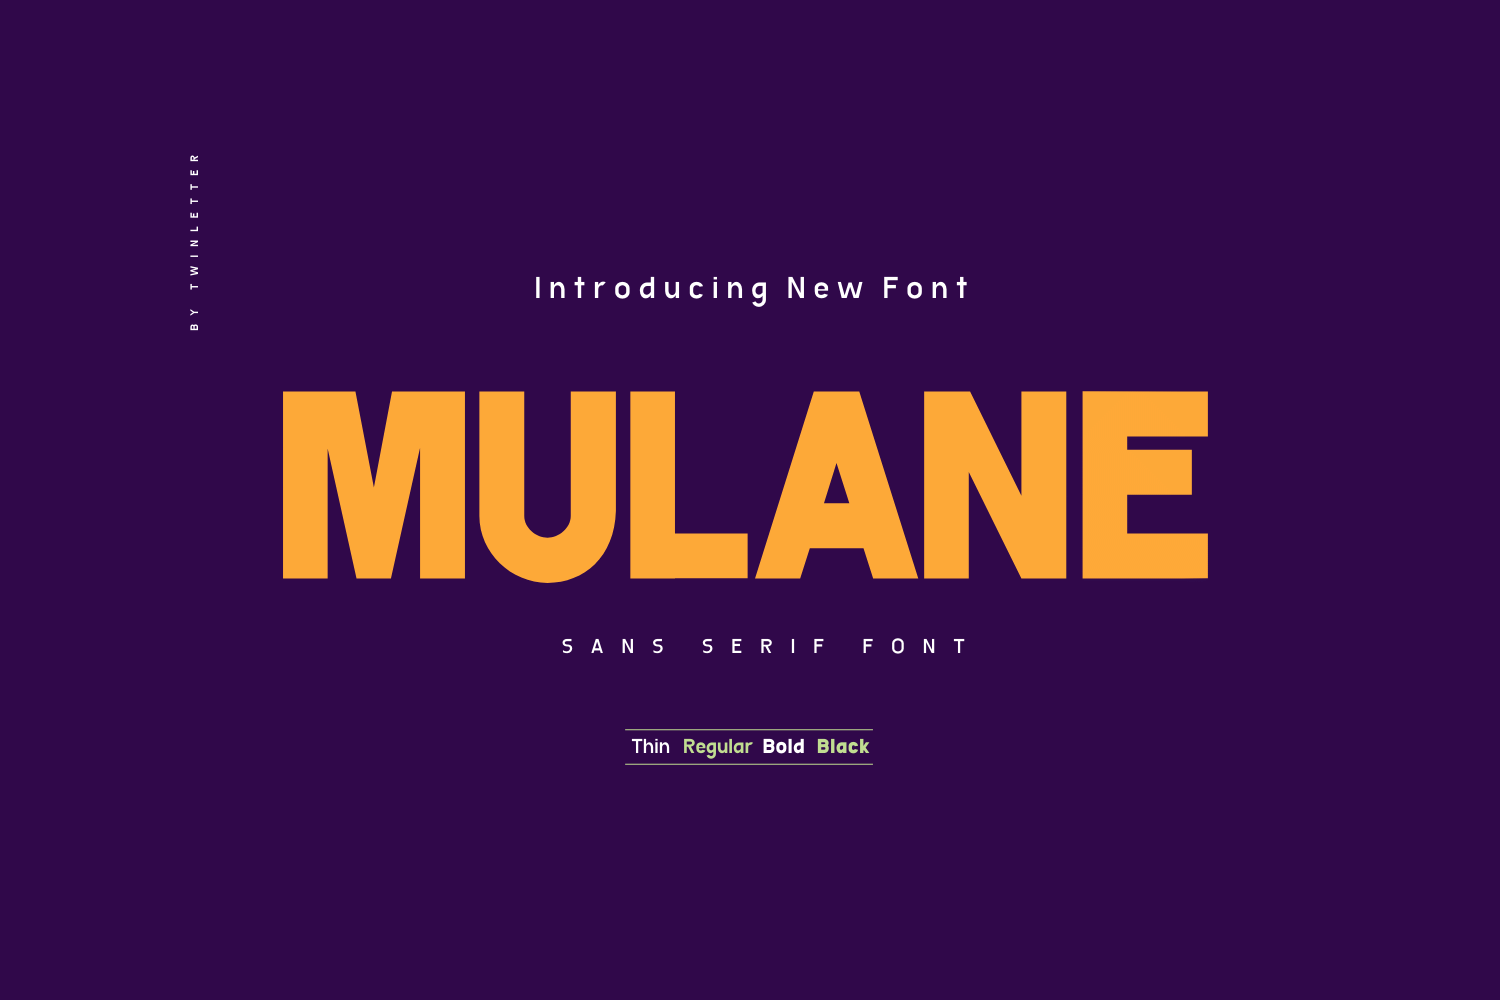 Mulane Free Font